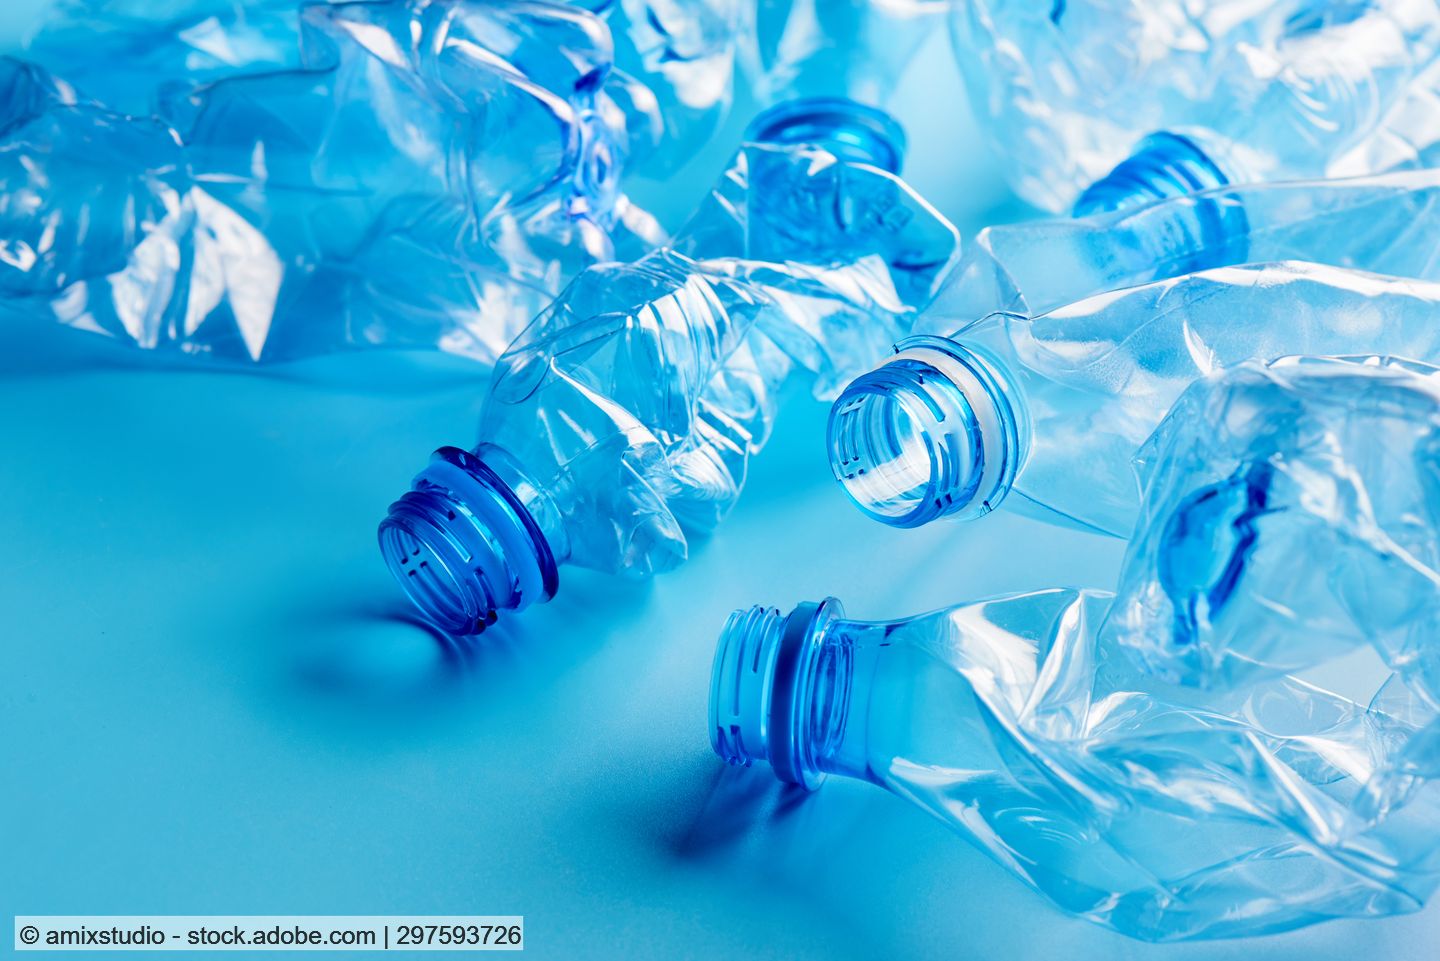 Crushed screw cap blue transparent PET bottles lying on a light blue background